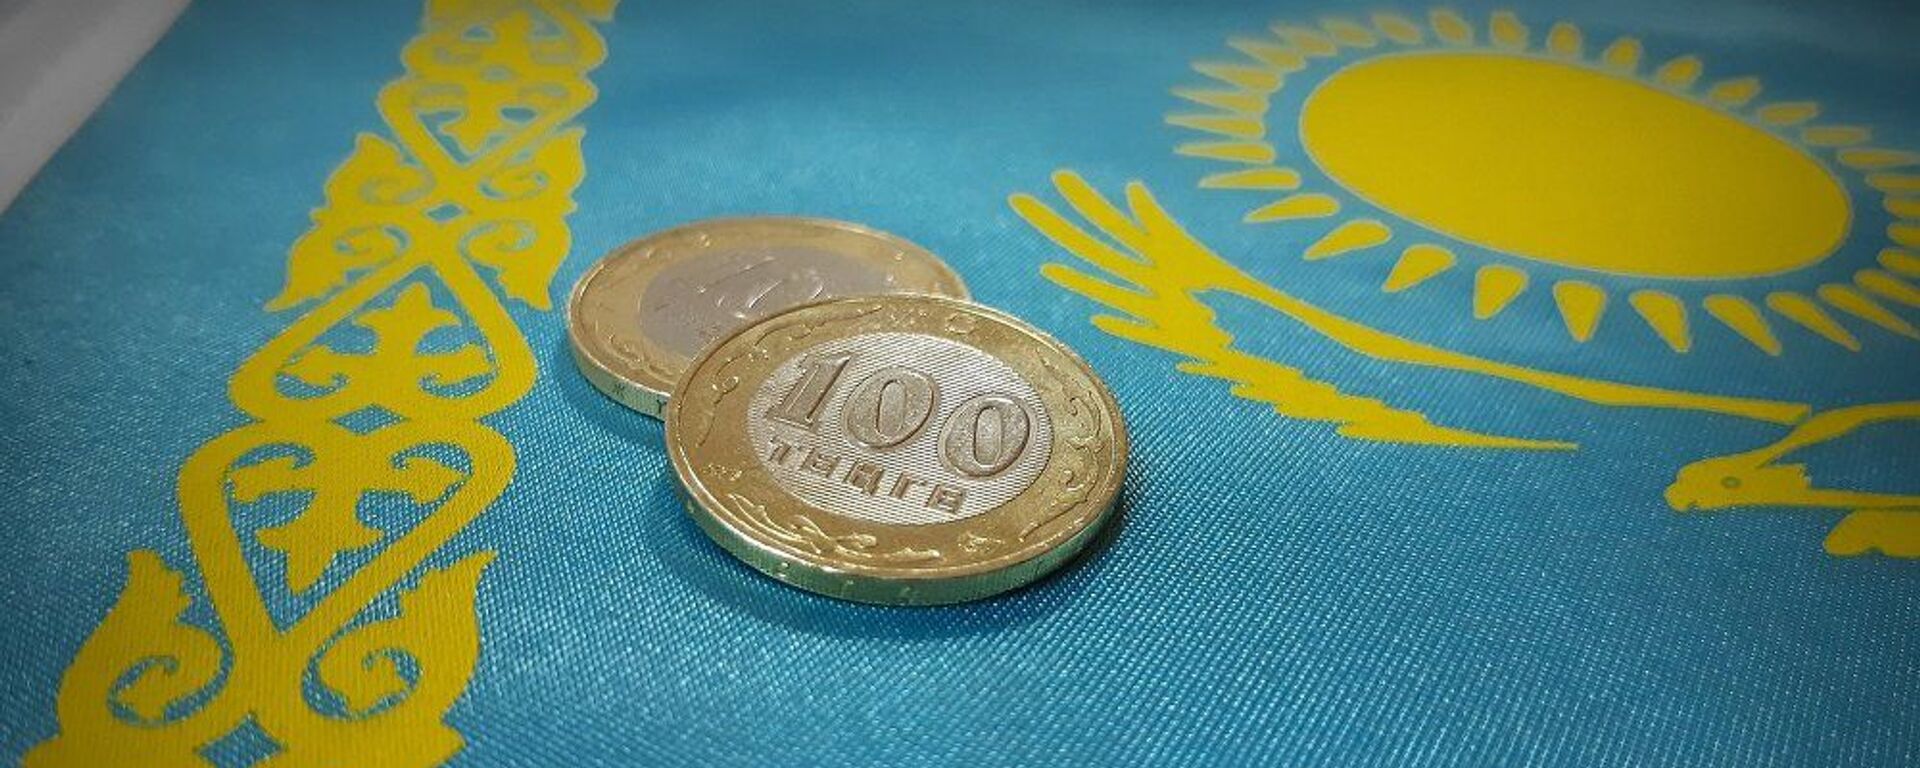 Курс валют тенге в Казахстане - Sputnik Кыргызстан, 1920, 06.01.2022